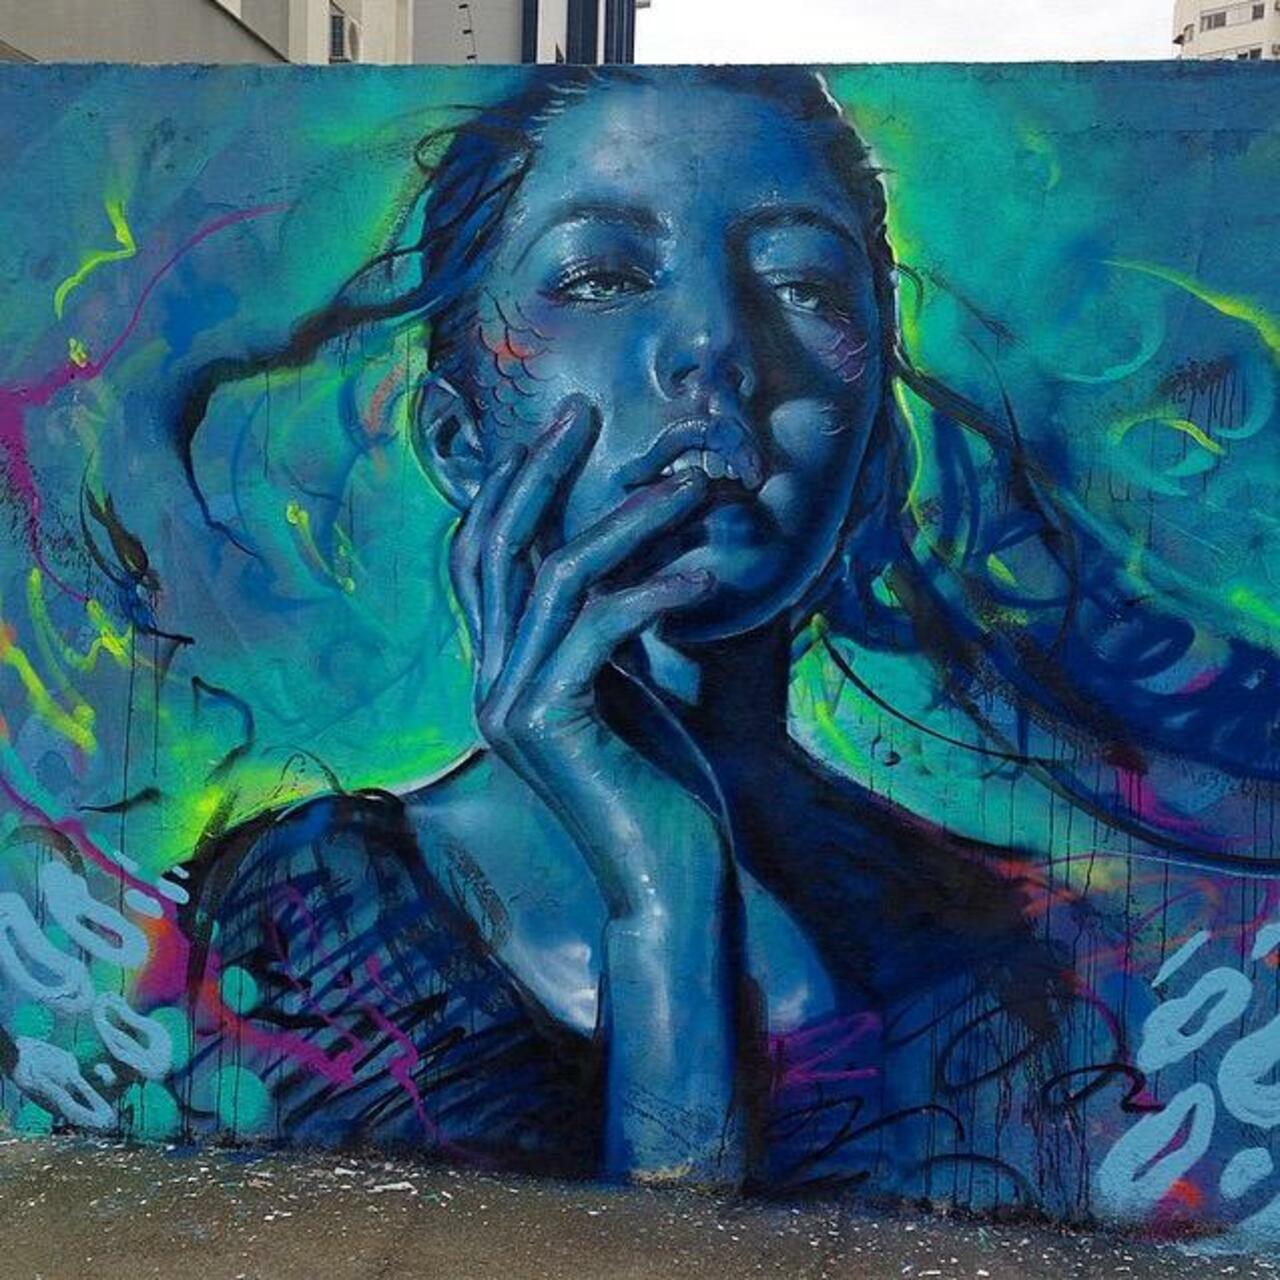 Thiago Valdi new Street Art piece titled 'Day Dreamer'

#art #mural #graffiti #streetart http://t.co/fmqSLVwlBI